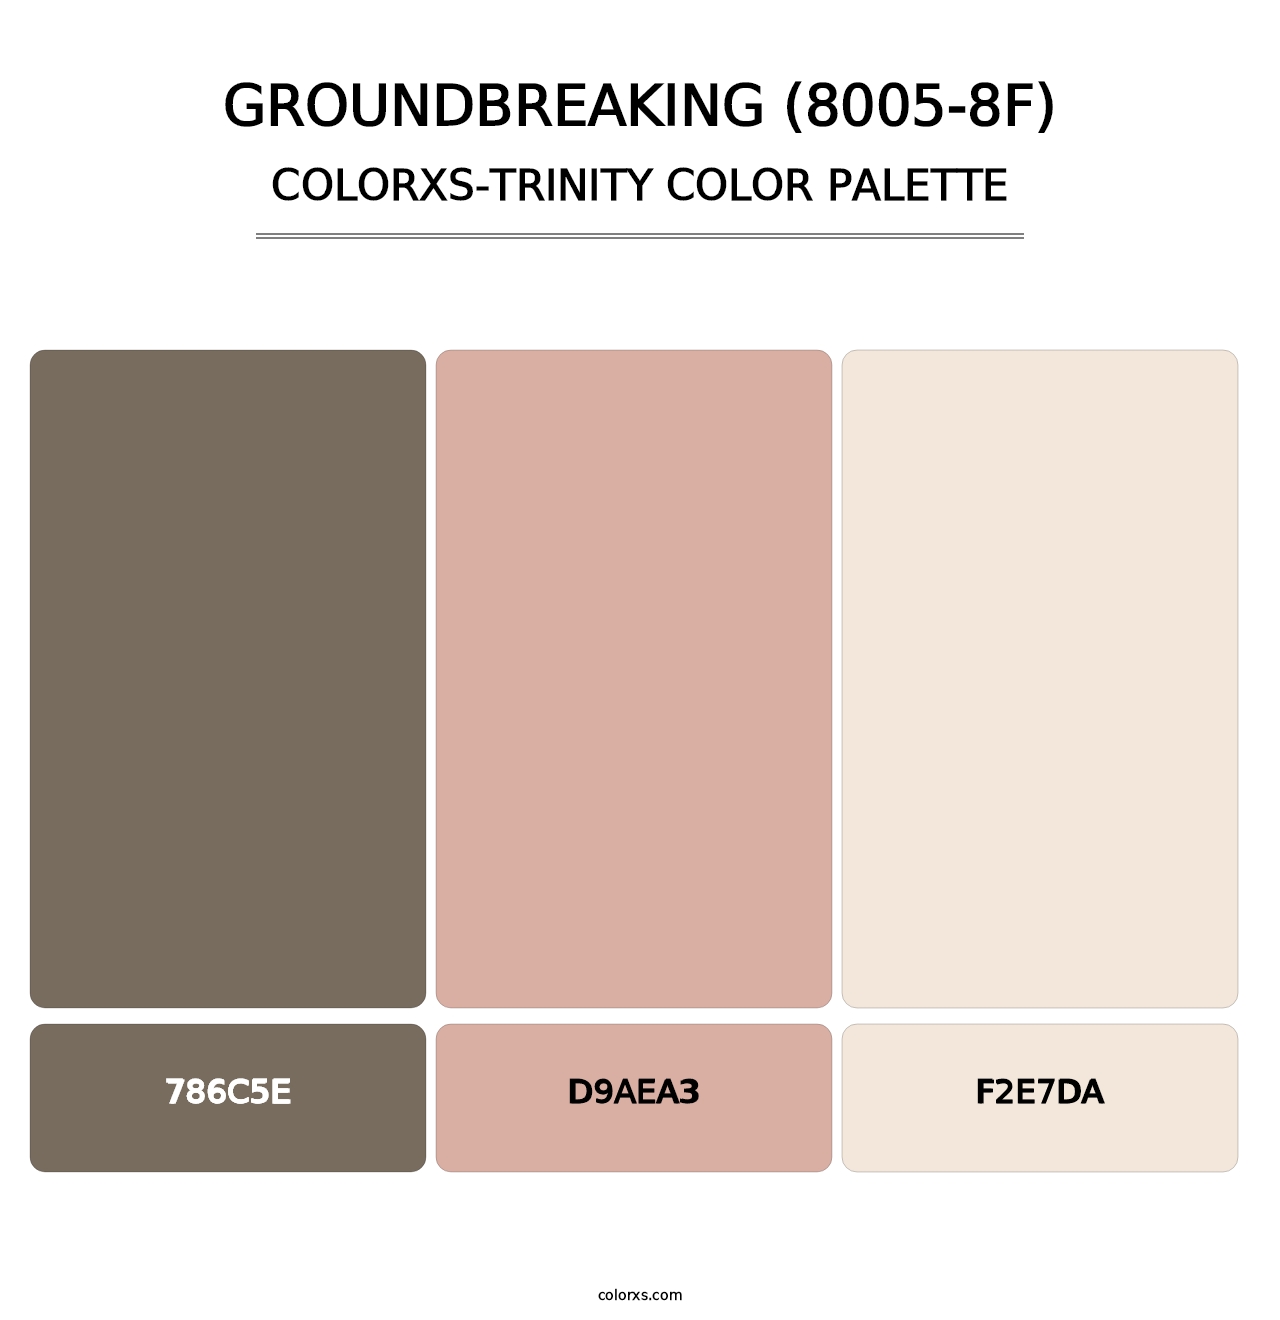 Groundbreaking (8005-8F) - Colorxs Trinity Palette